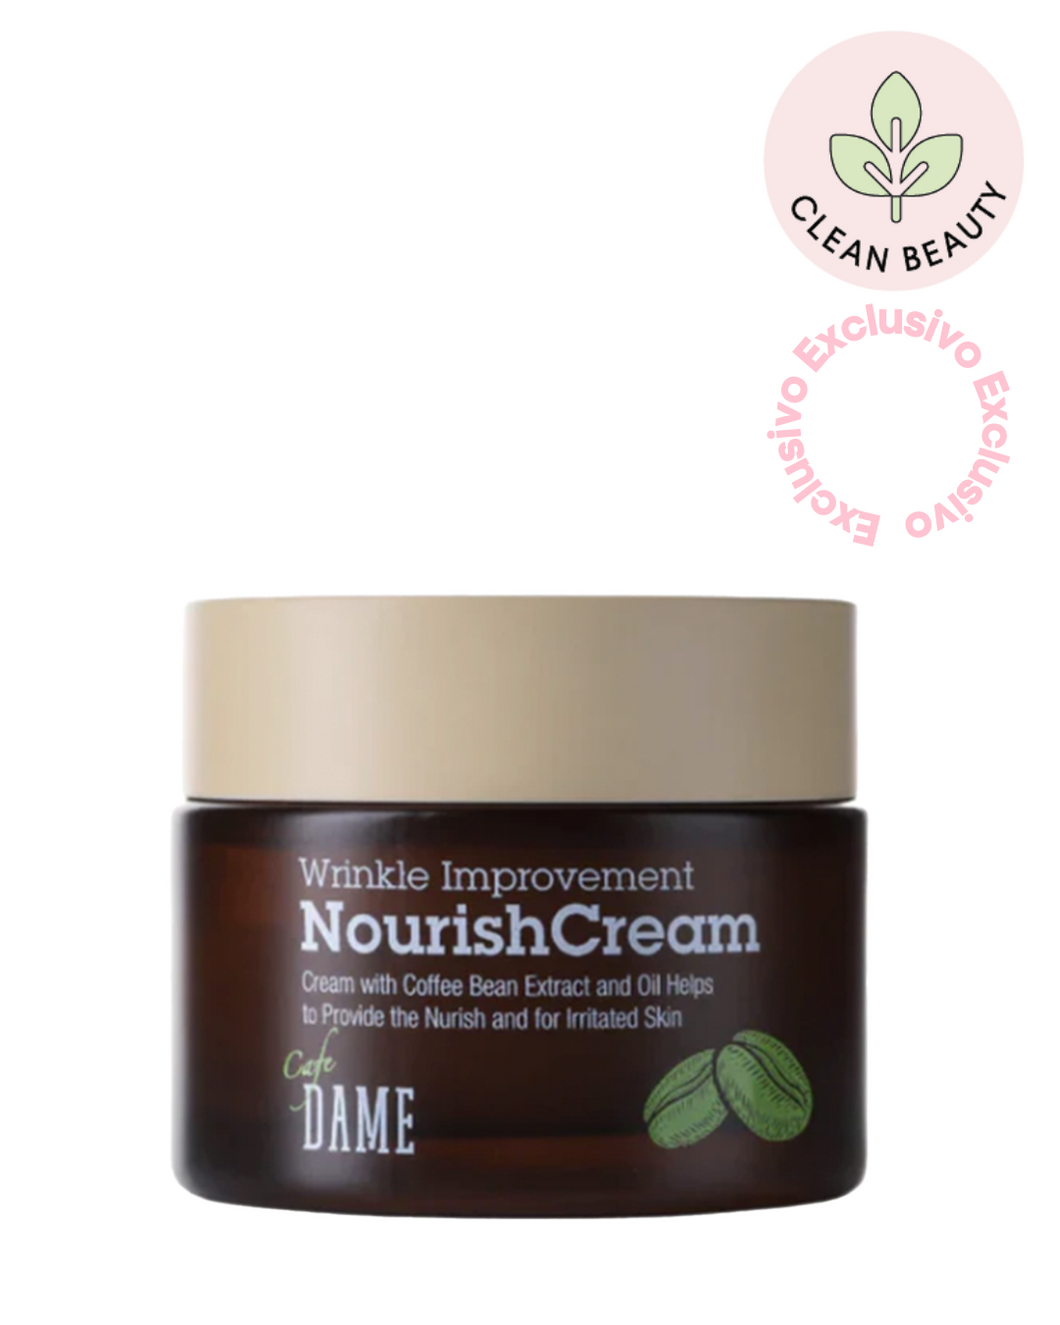 Cafe Dame - Wrinkle Improvement Nourish Cream